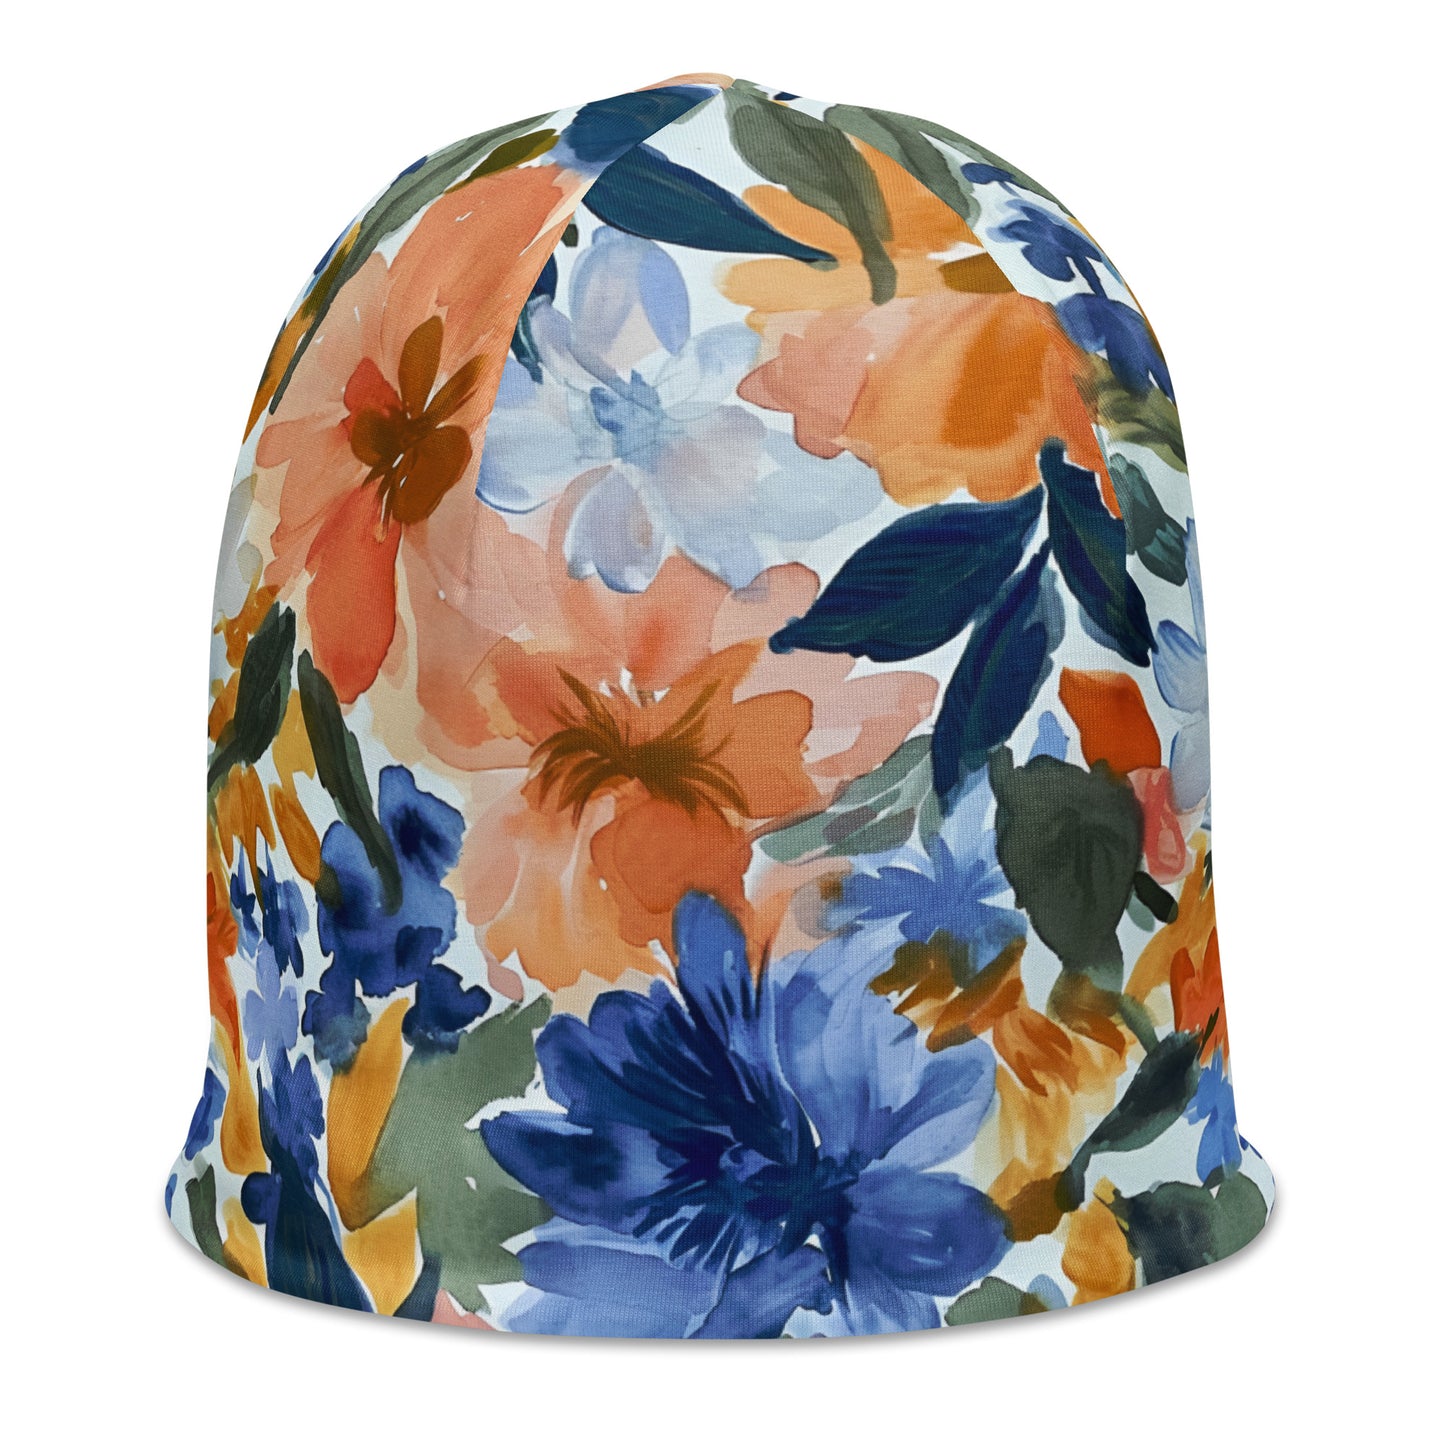 Floral Beanie, Watercolor Flowers Soft Fleece Party Men Women Ladies Stretchy Winter Adult Aesthetic Designer Graphic Cap Hat Gift